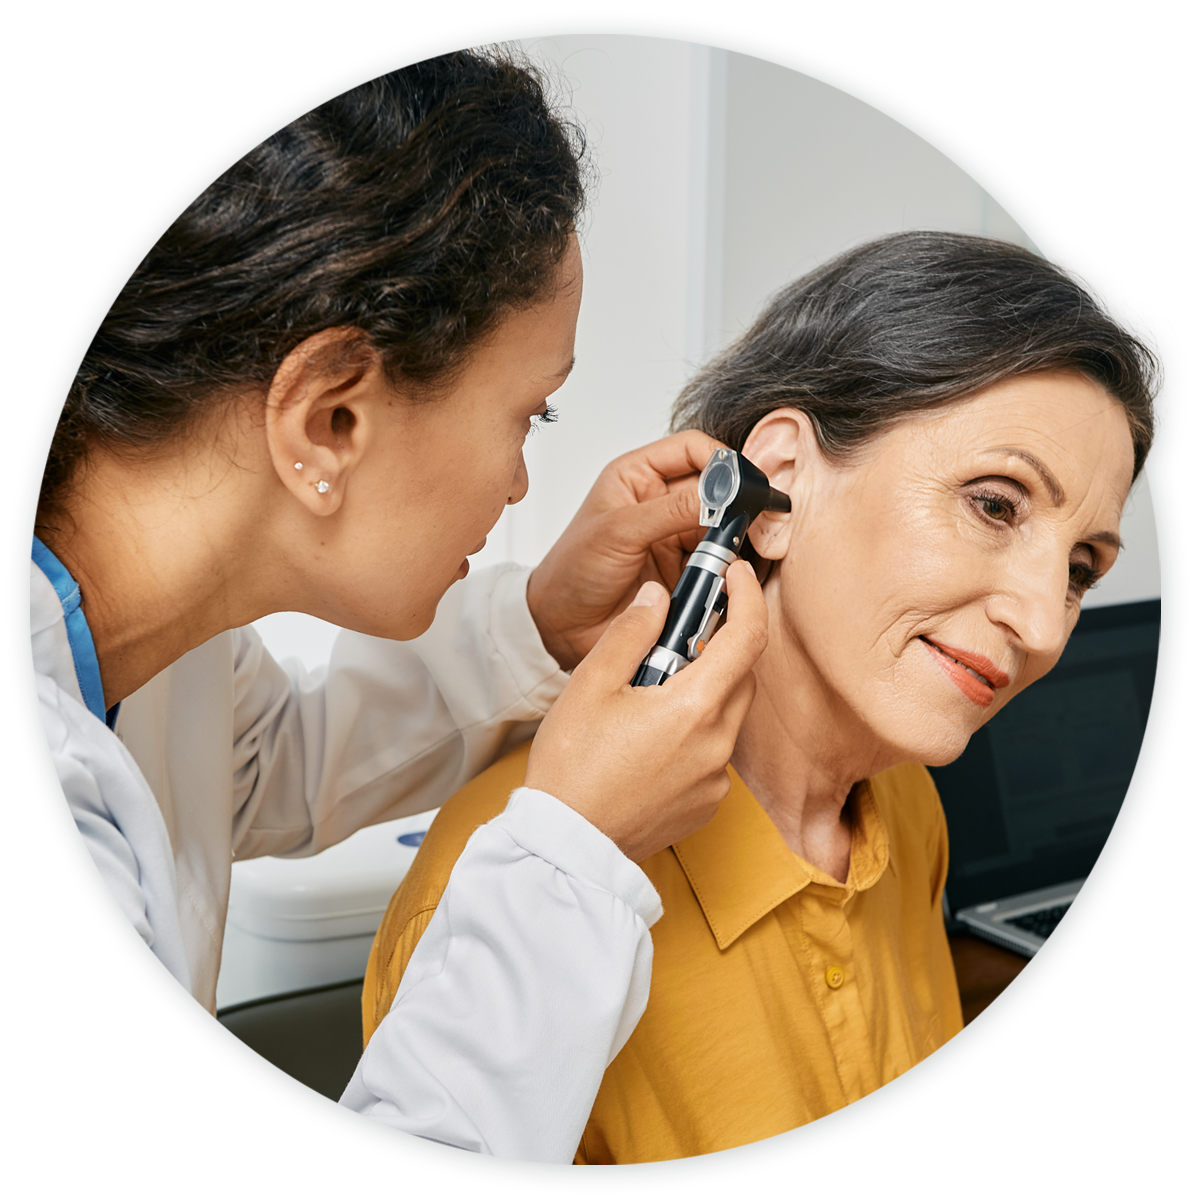 Otolaryngologist examining female patient's ears